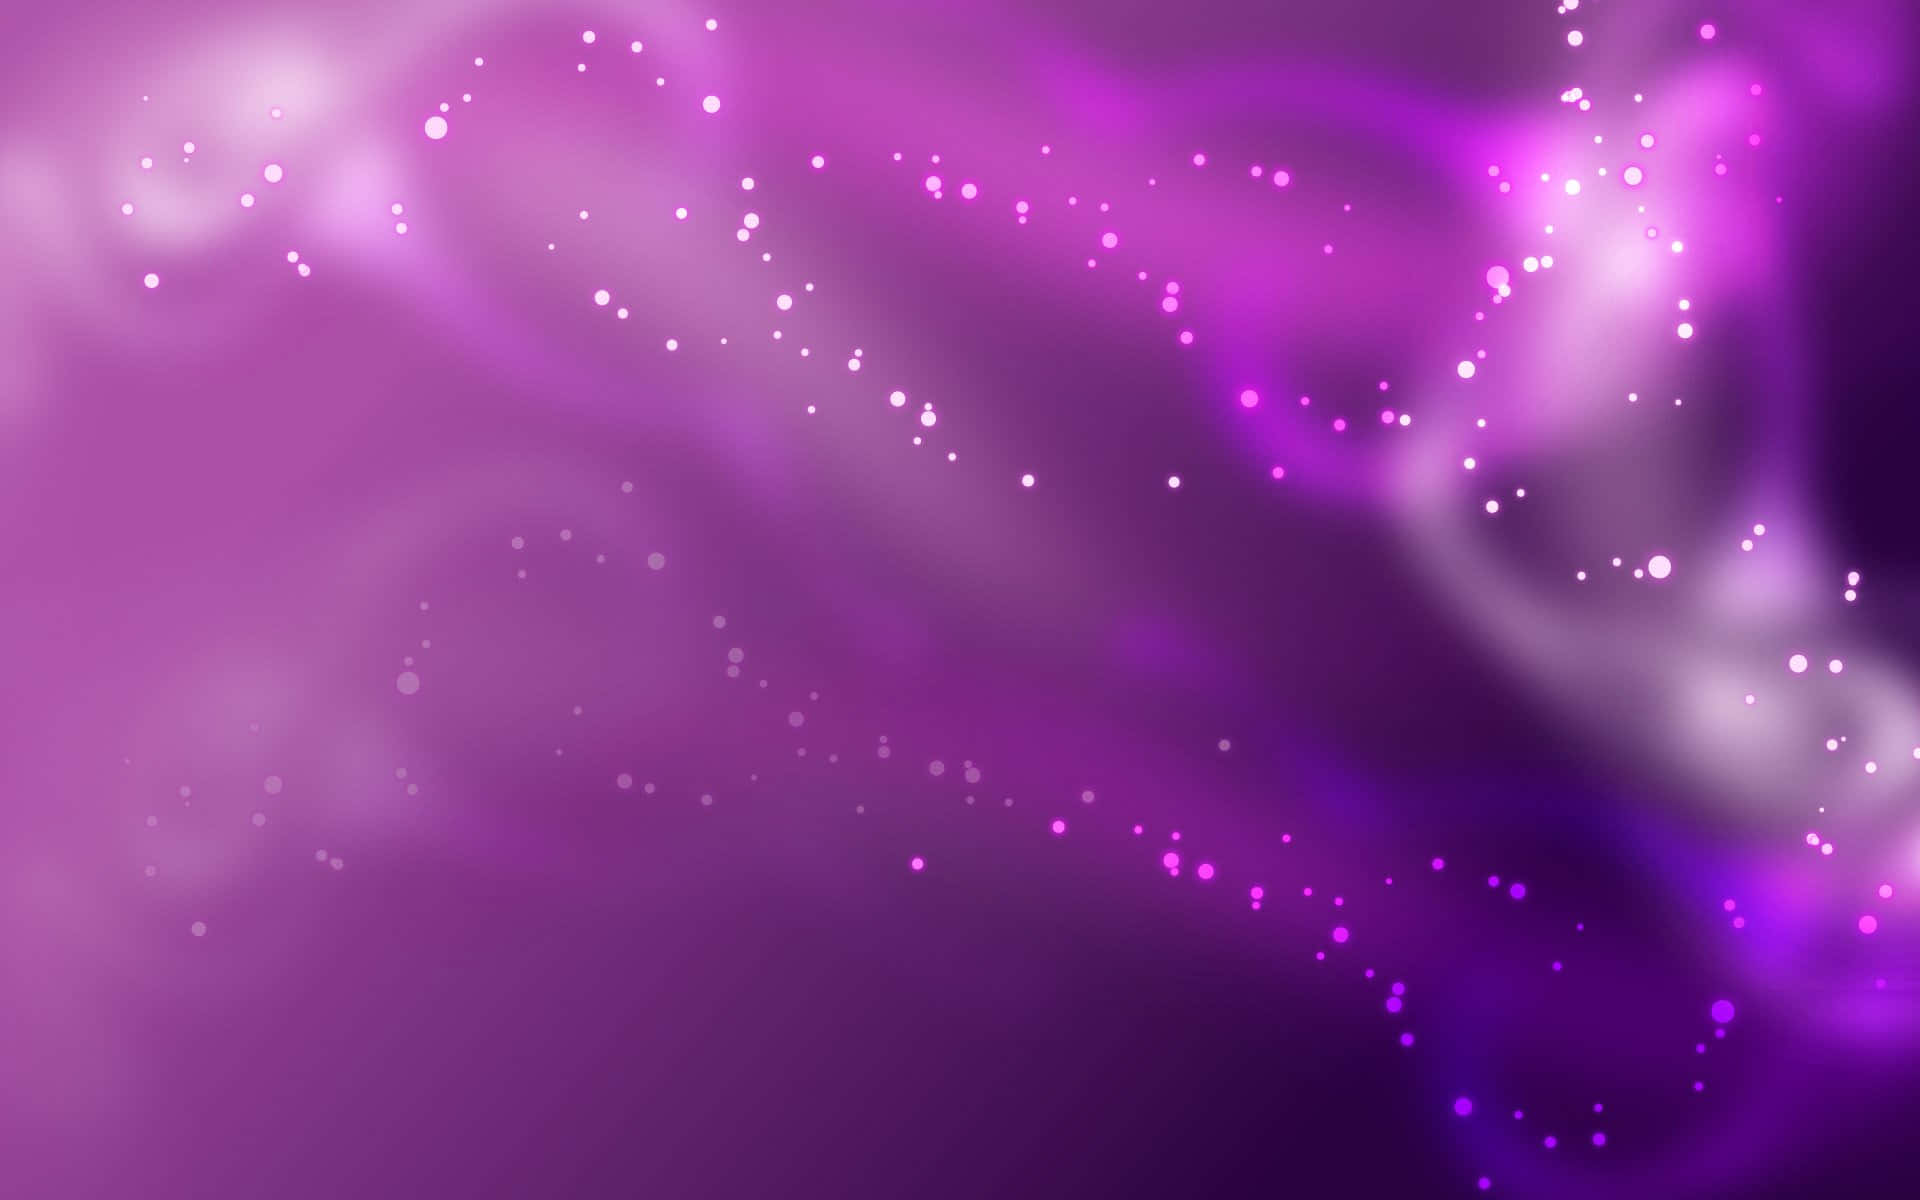 Faint Pretty Purple Swirls With Glitters Background